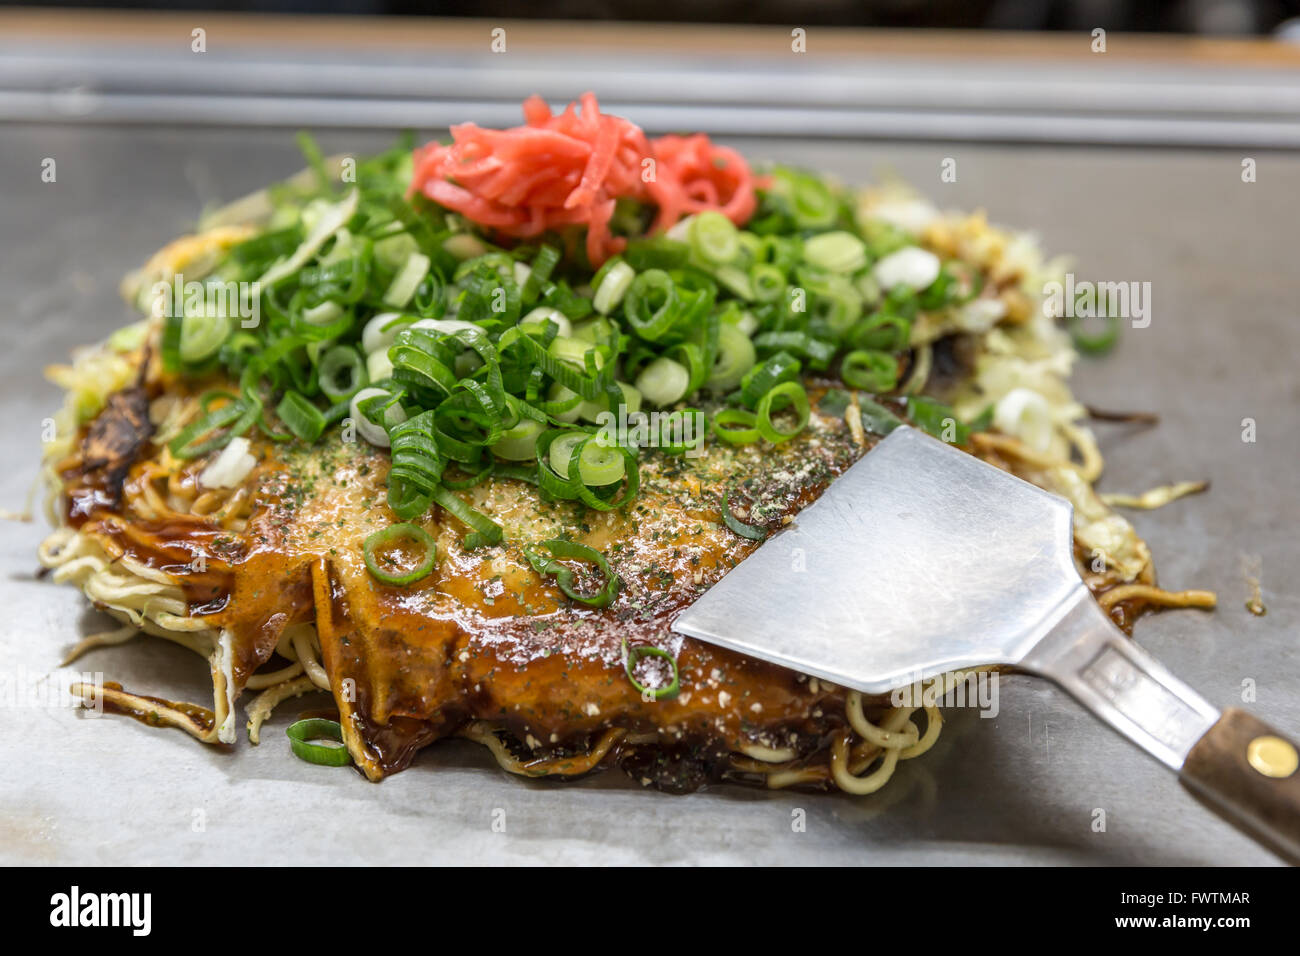 okonomiyaki japanese pizza hiroshima style Stock Photo